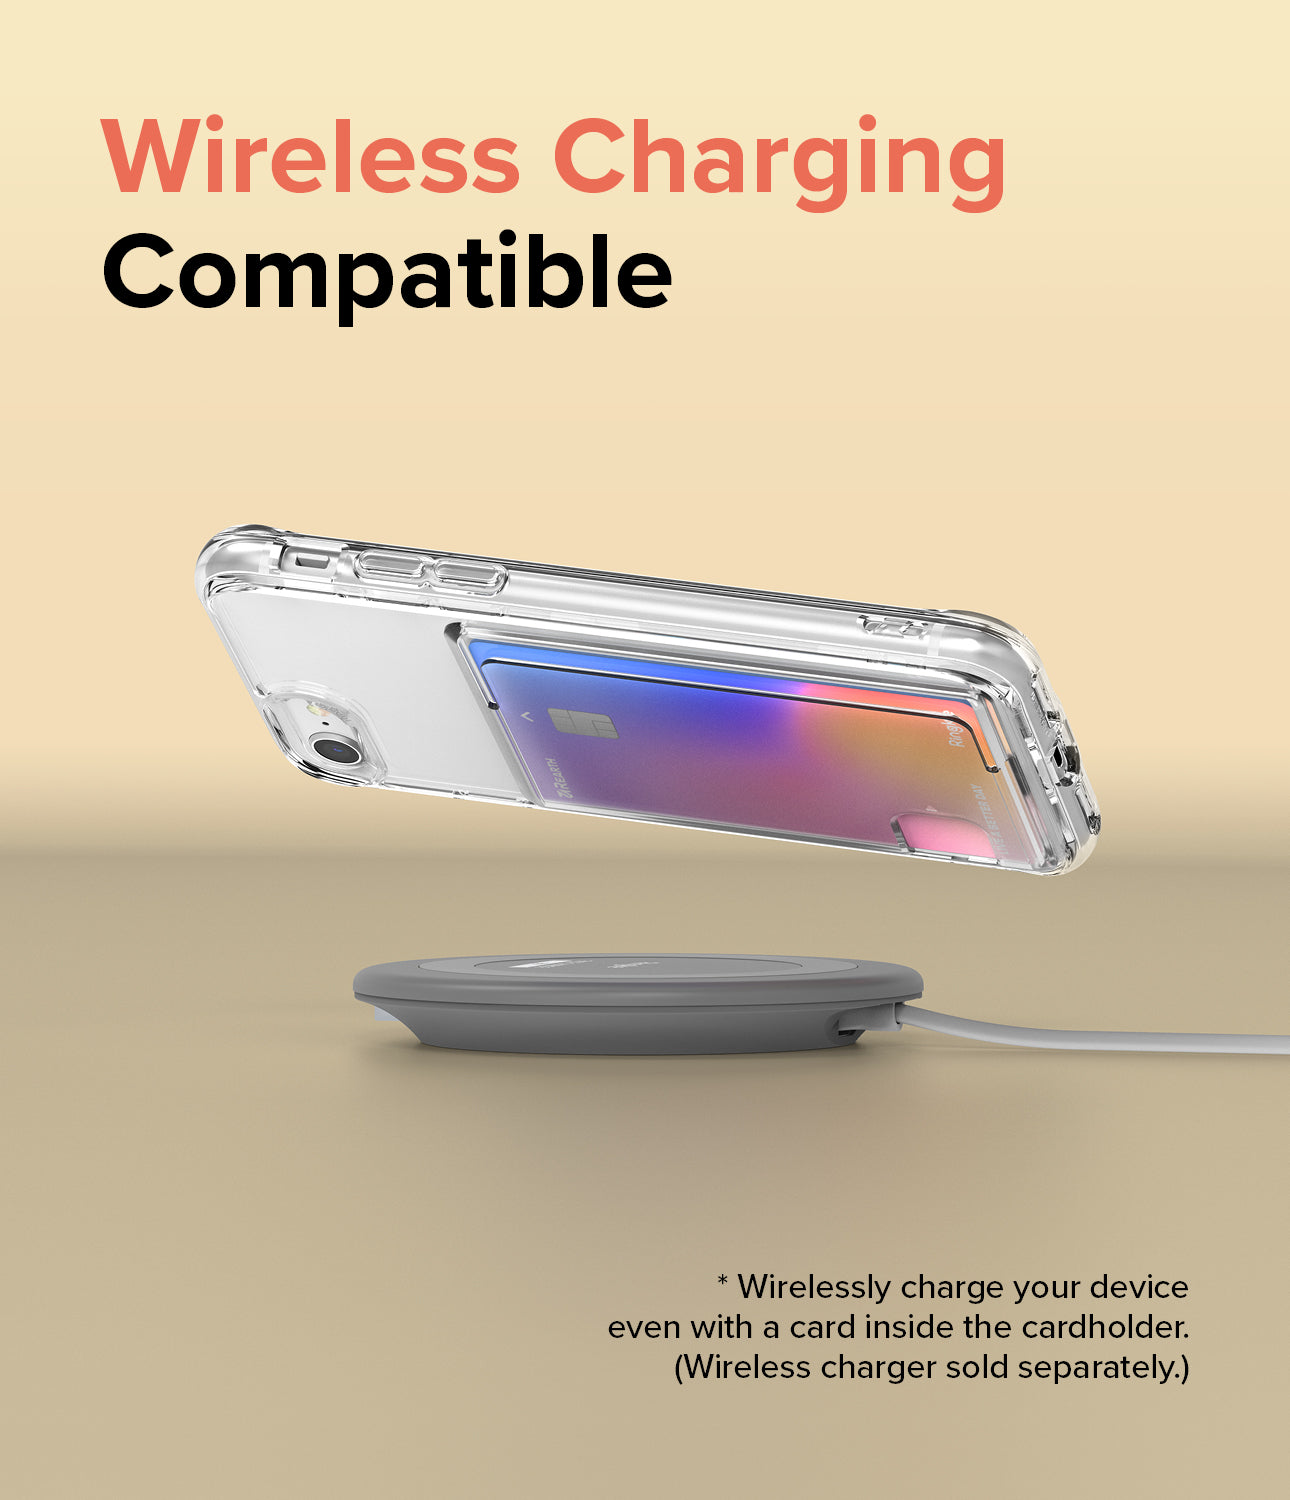 iPhone SE 2022 5G (SE 3) / SE 2020 Case  Ringke Fusion Design 01. Seoul –  Ringke Official Store